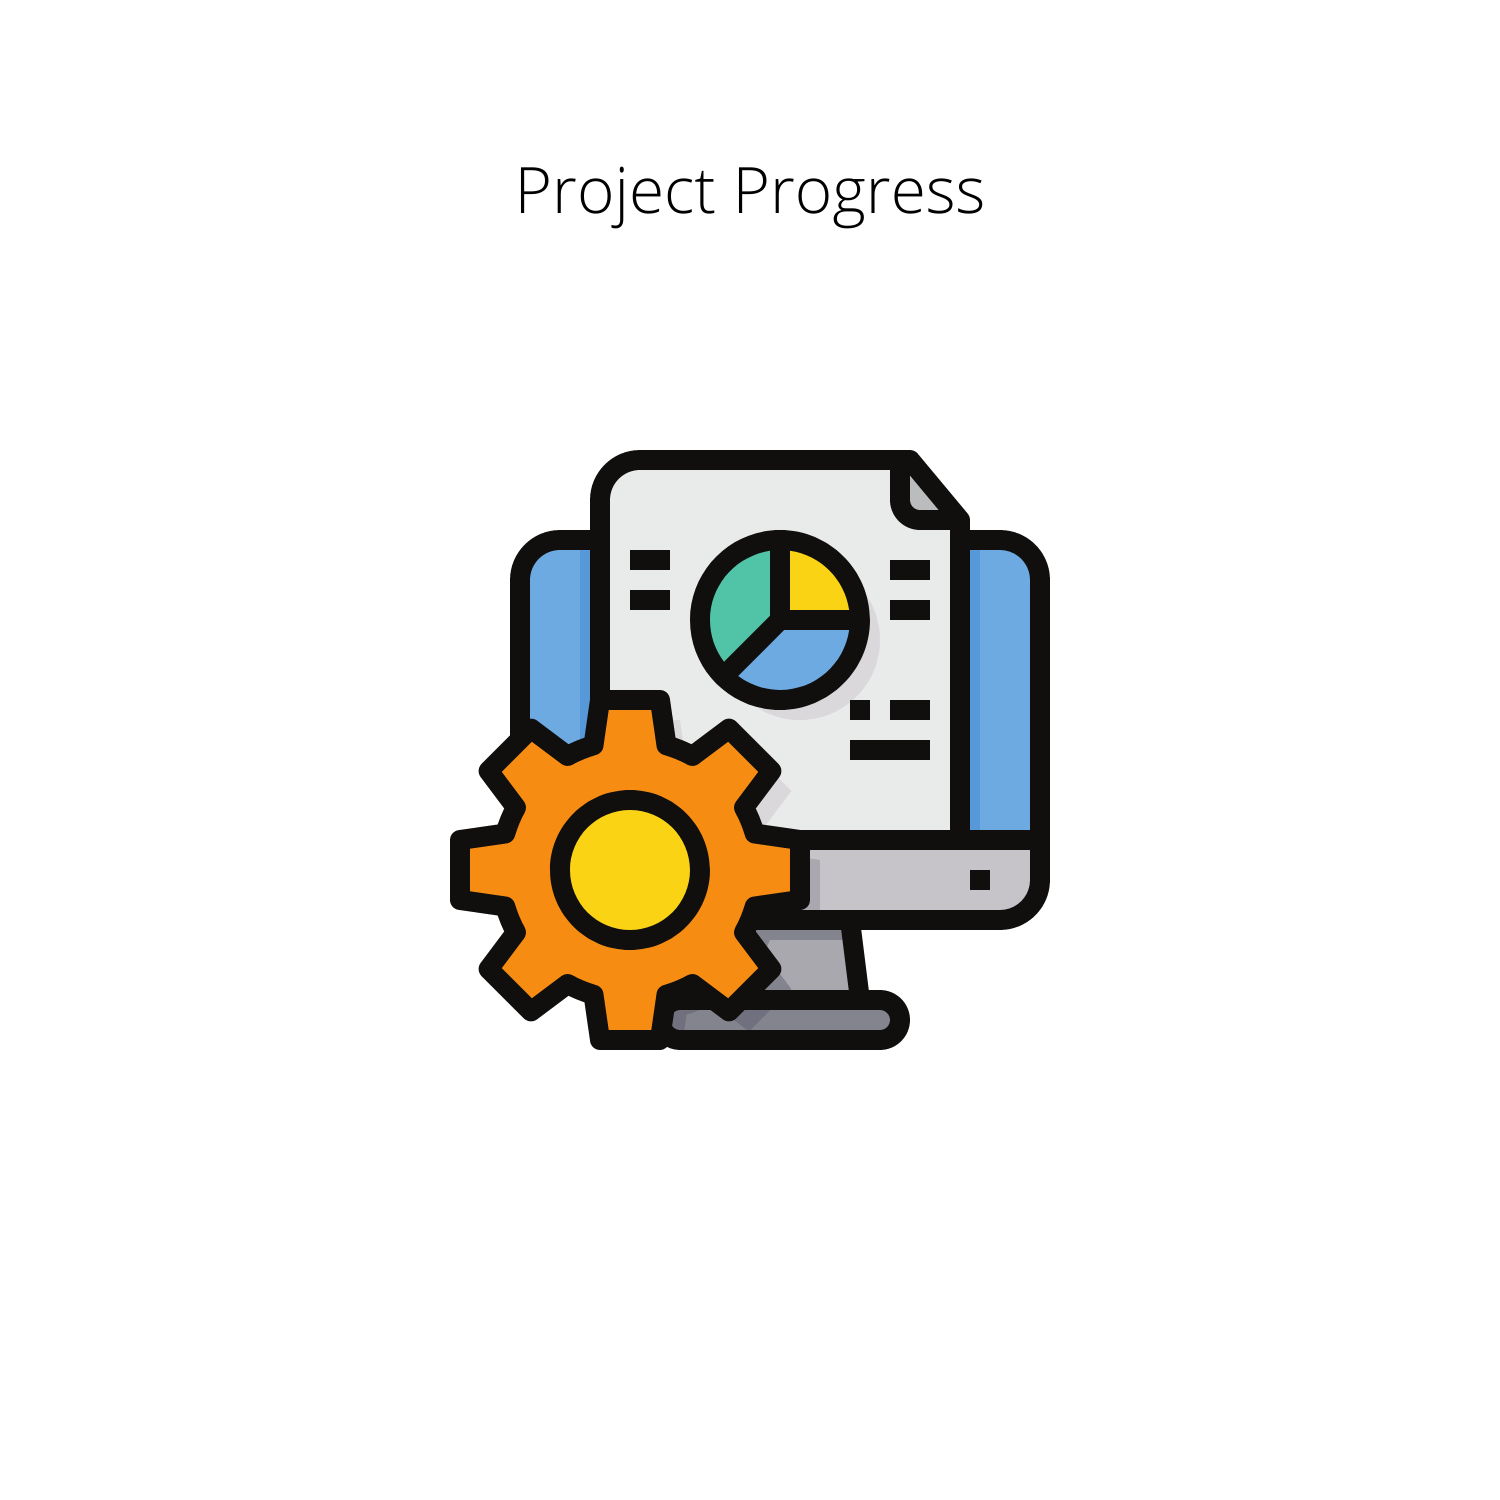 Project Progress